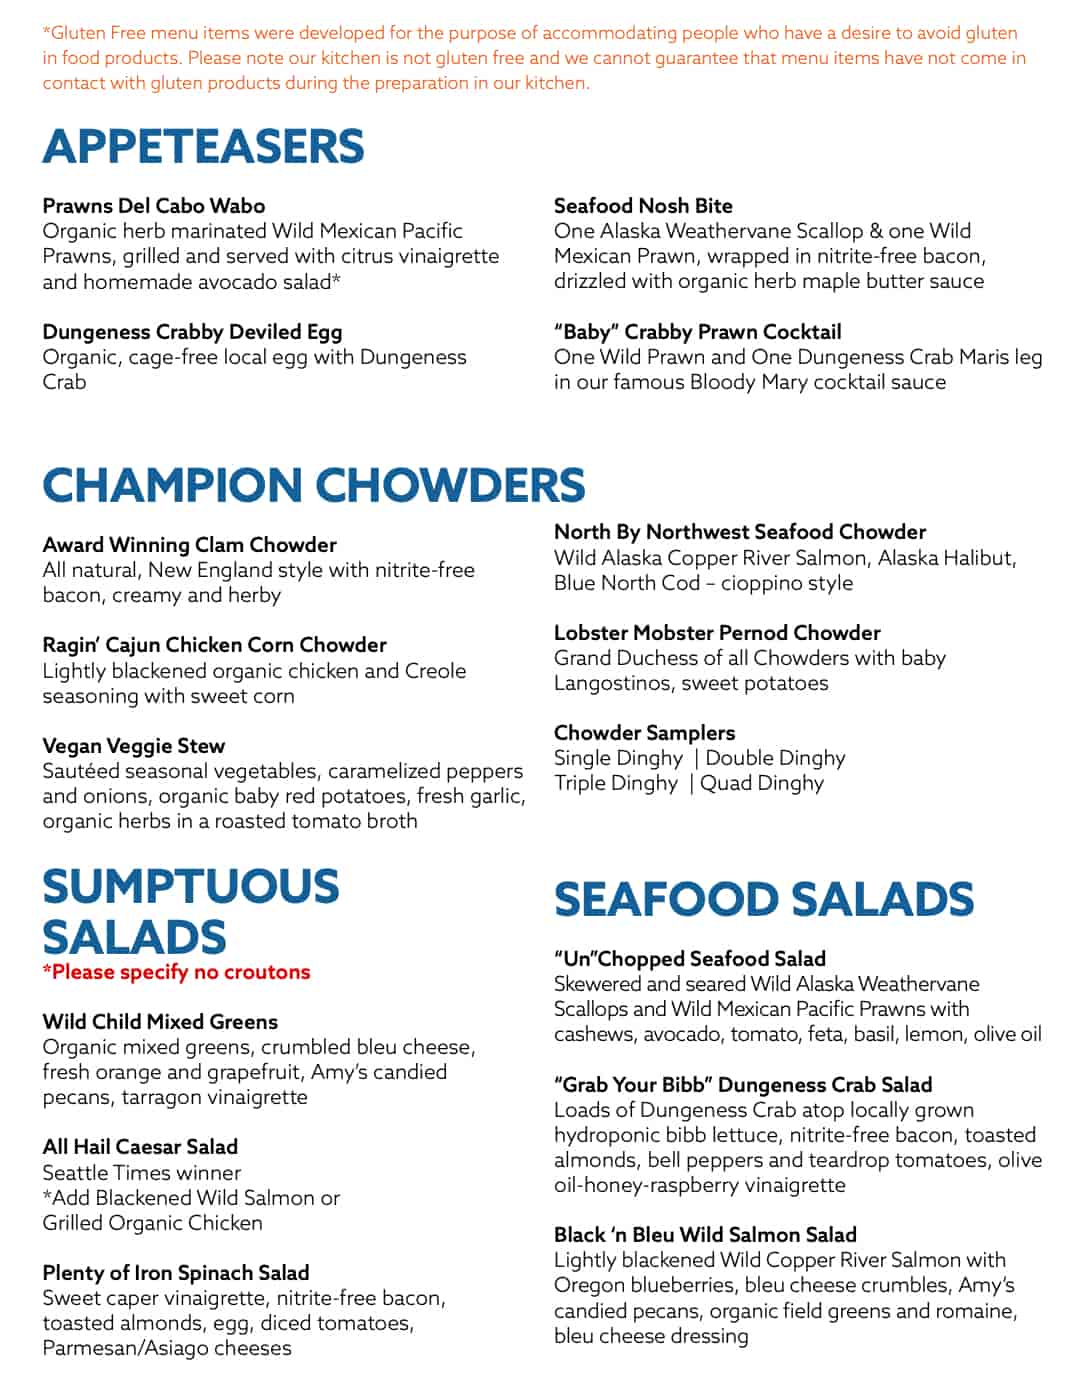 Duke's Seafood and Chowder Gluten Free Menu